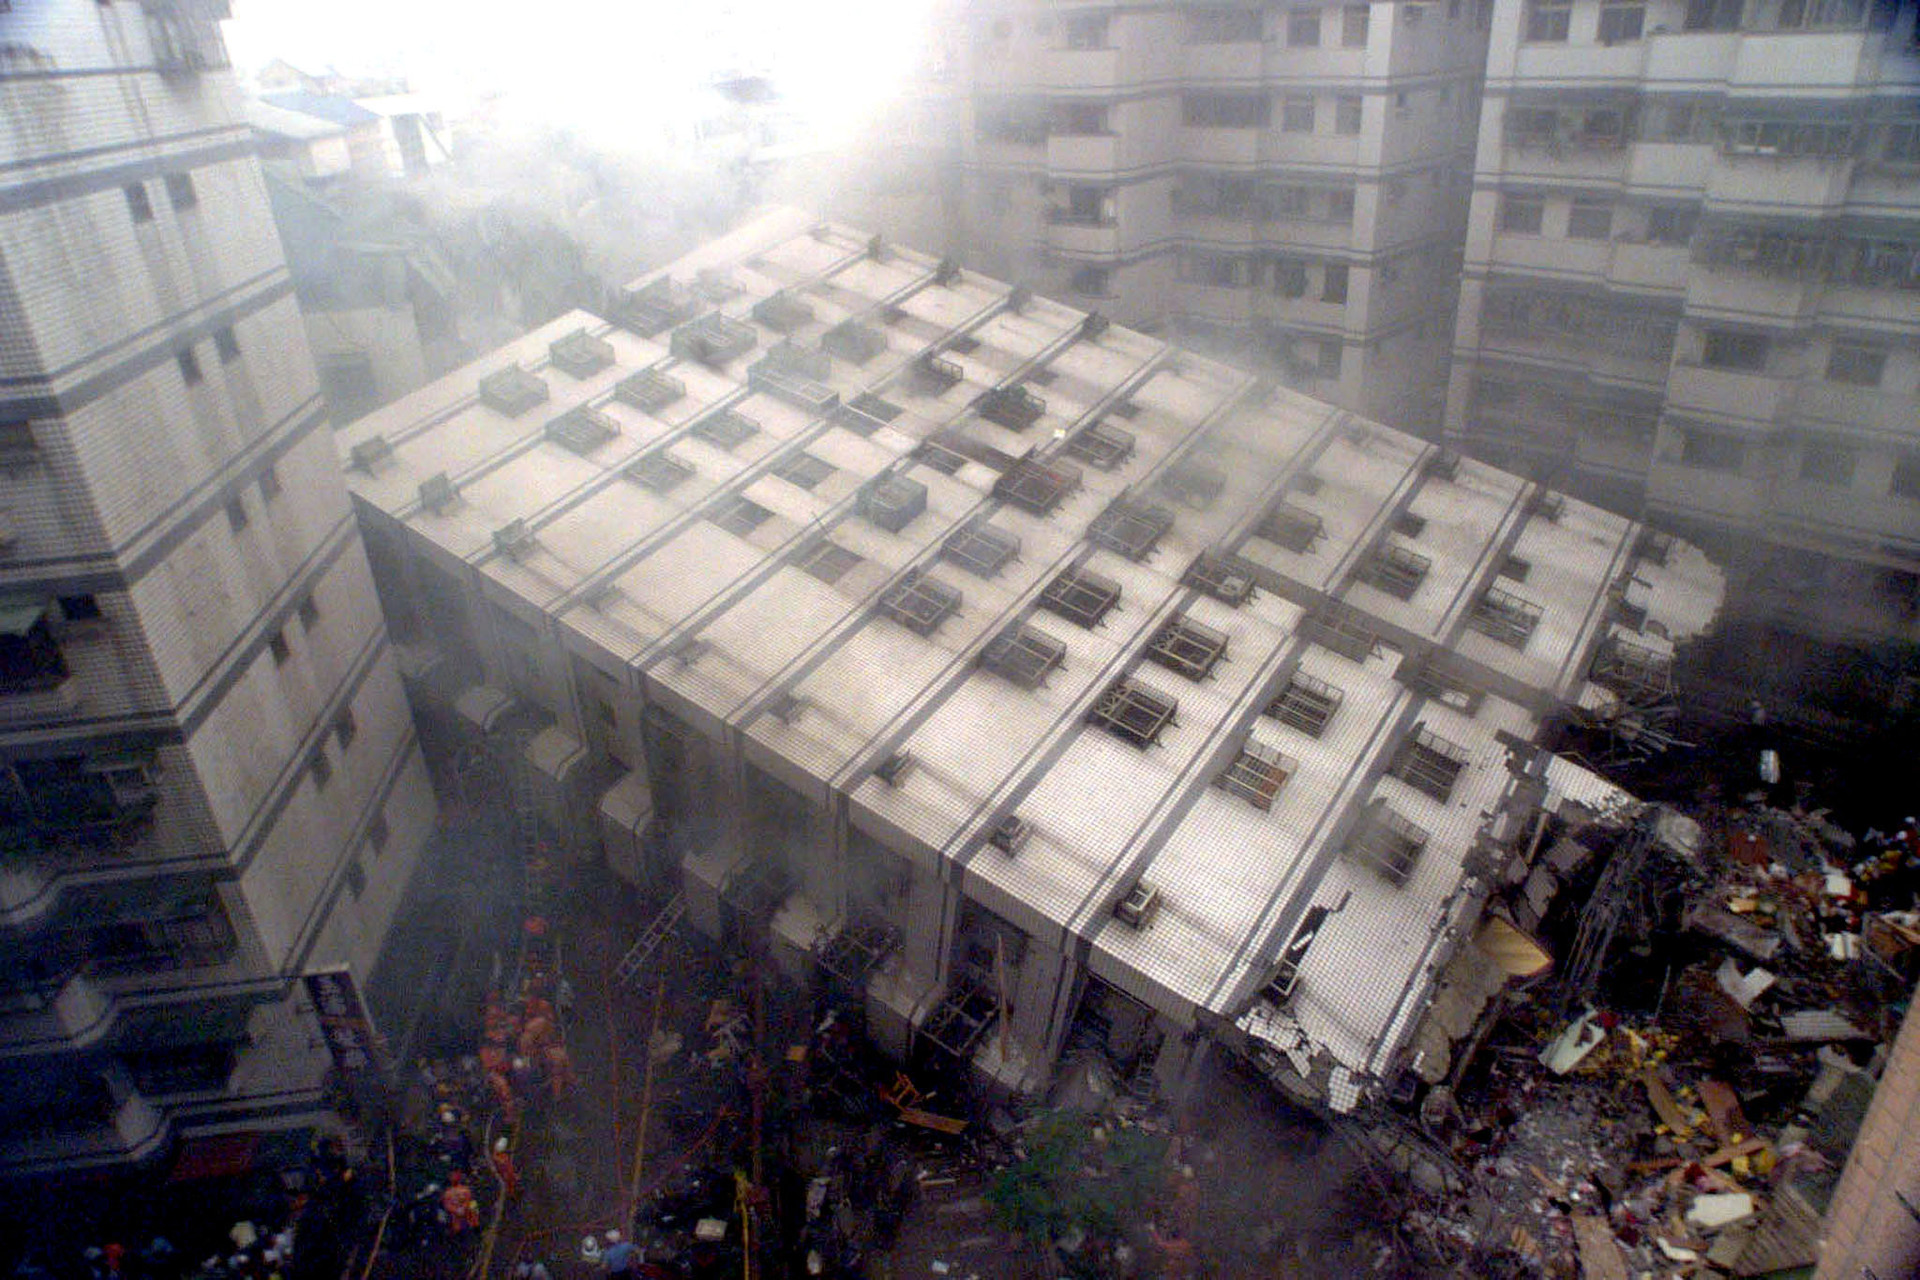 Jiji Earthquake: 20 years since the disaster in Taiwan - Teller Report